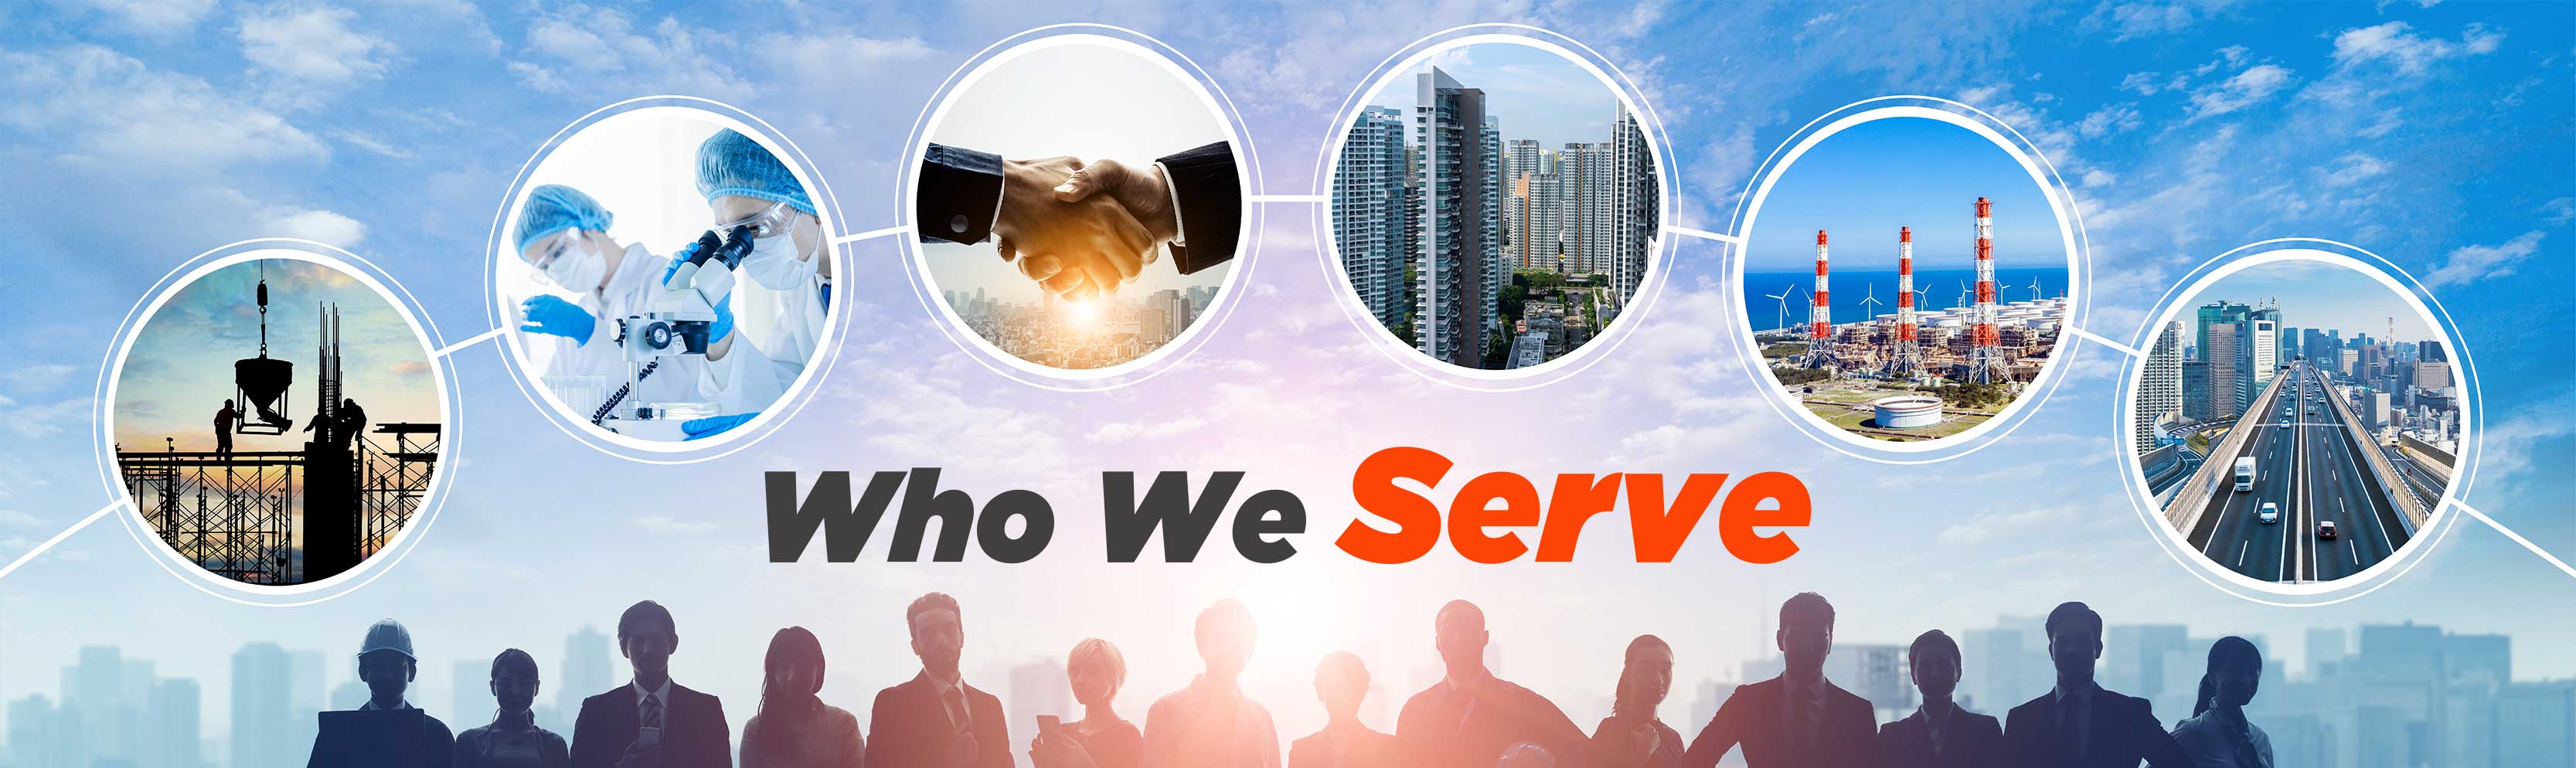 Who We Serve